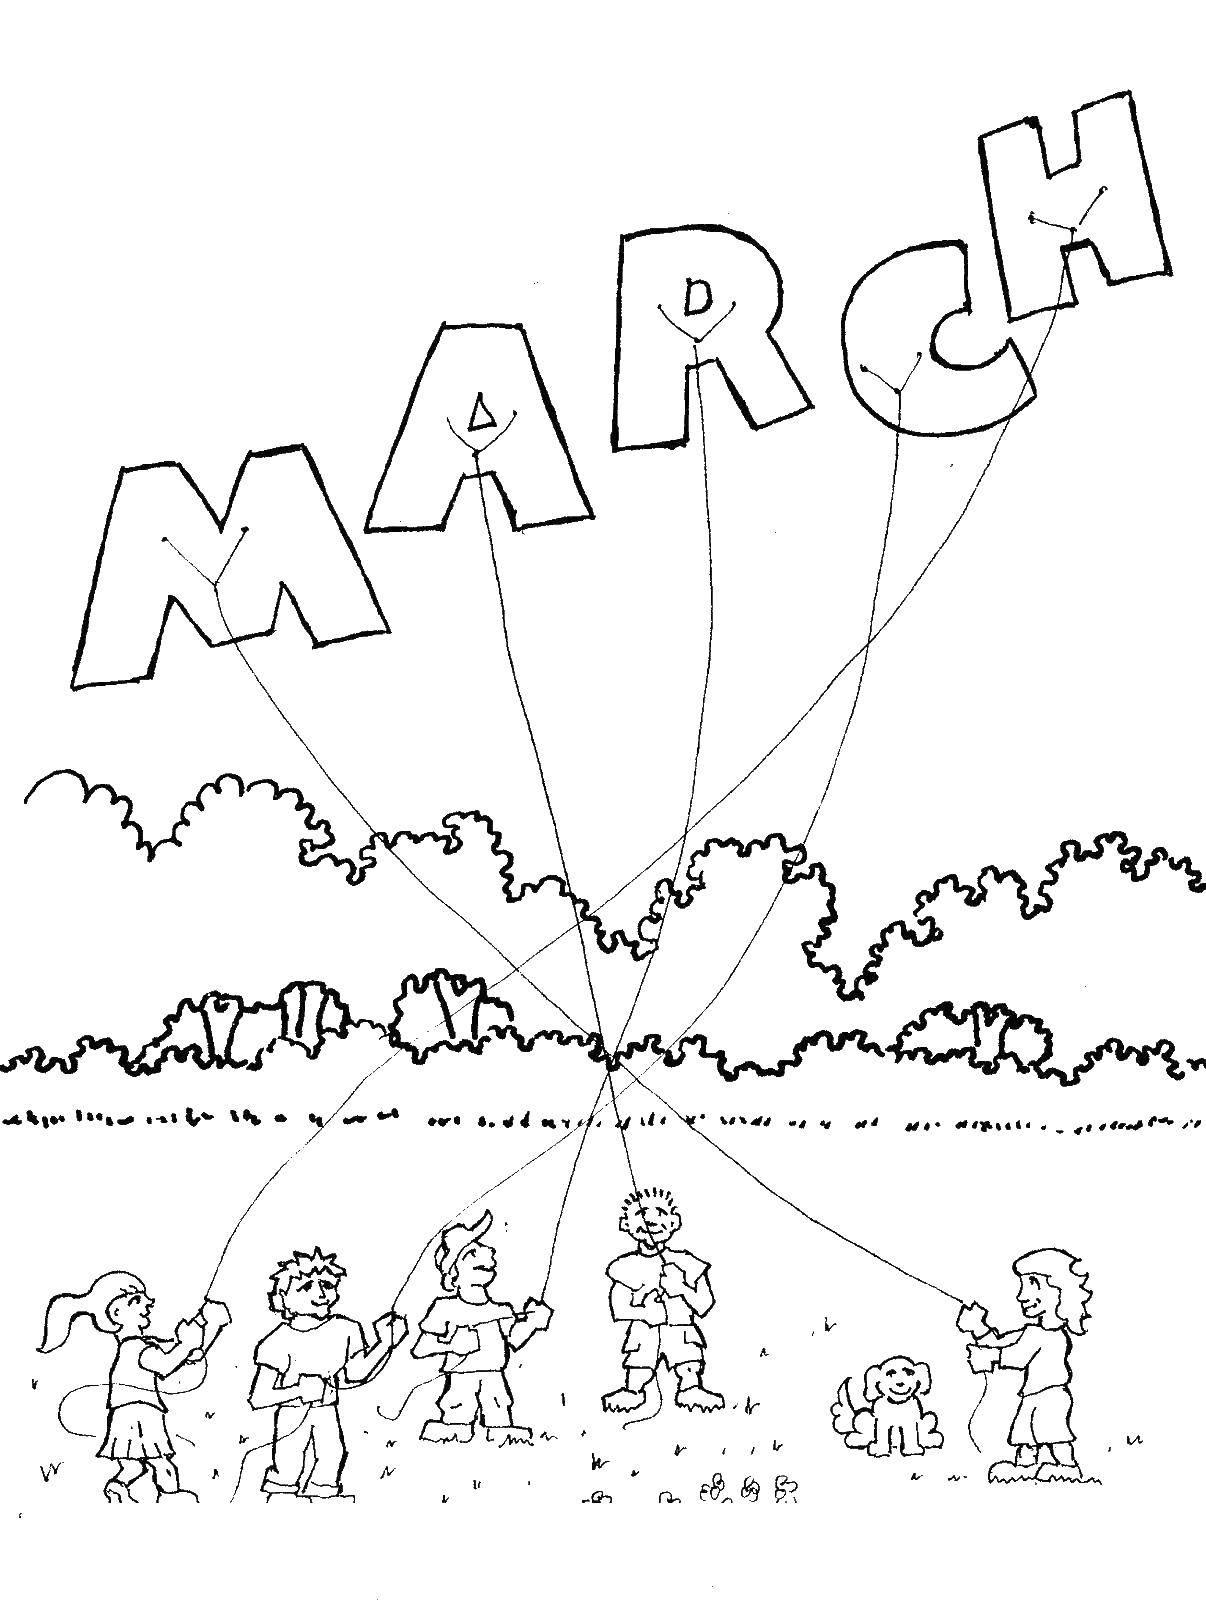 Название: Раскраска Март. Категория: Календарь. Теги: март.